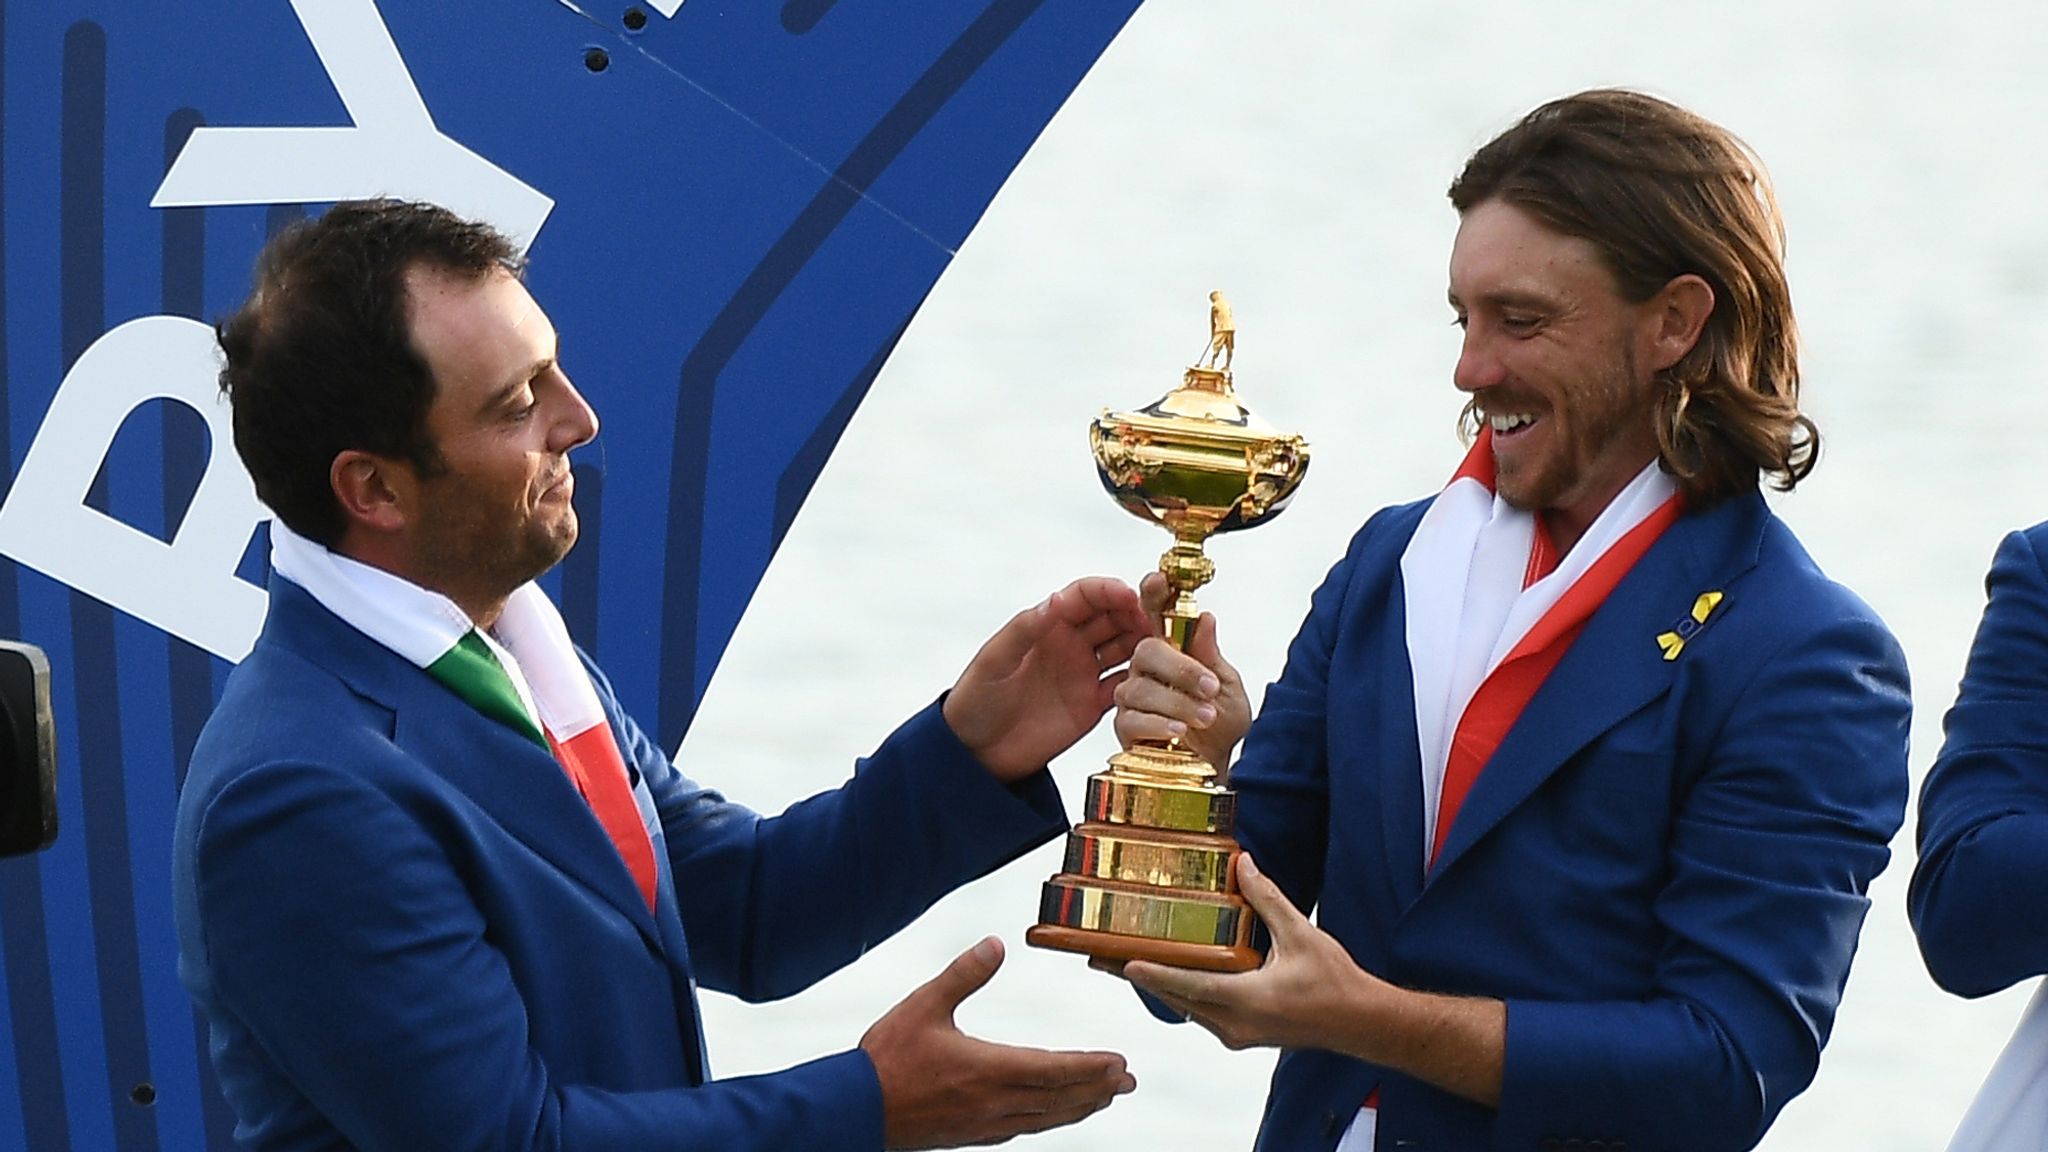 Ryder Cup will boost Italian golf says federation head